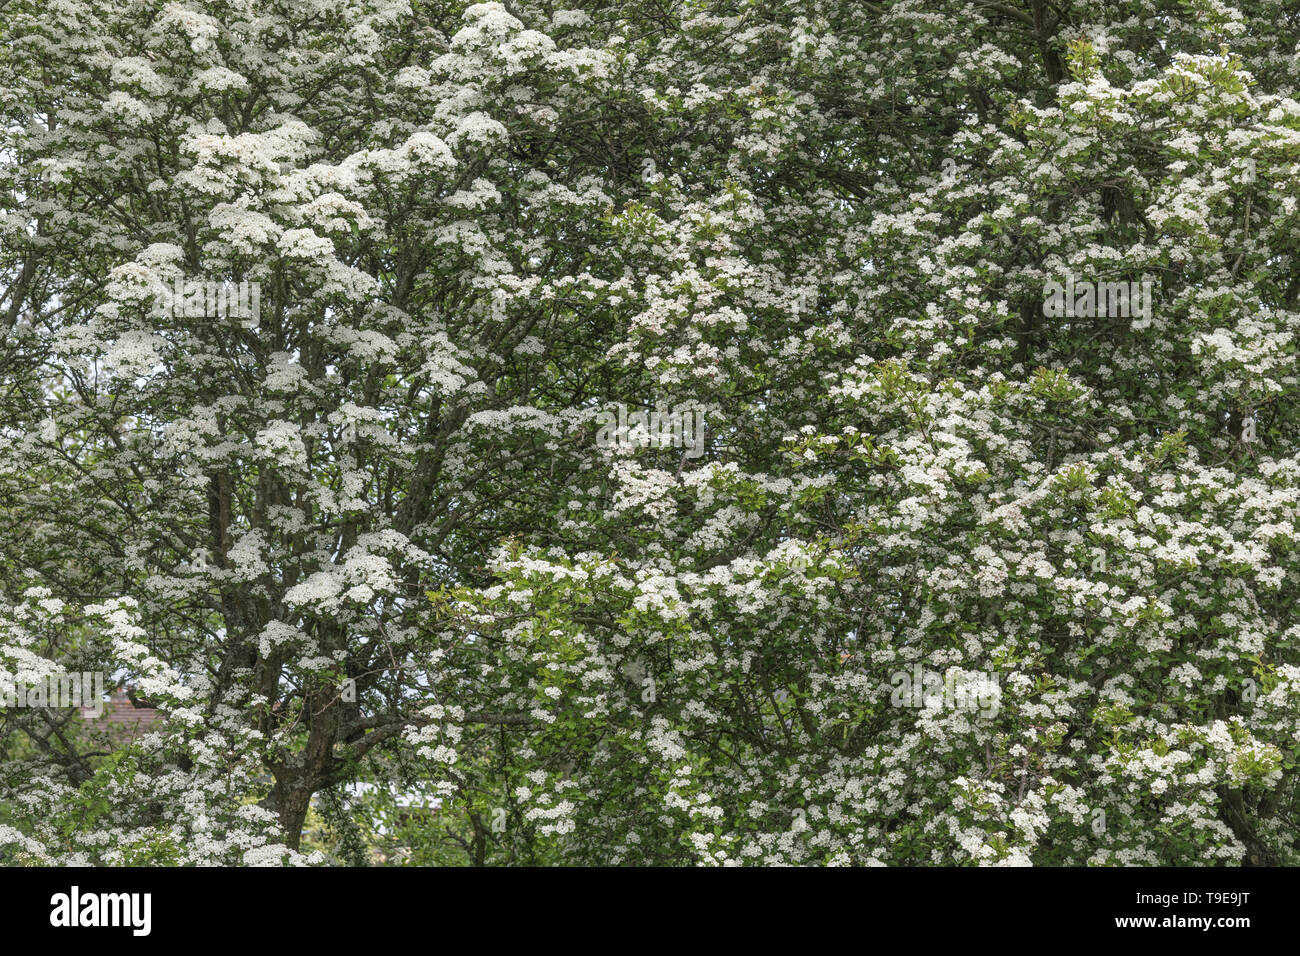 White flower blossom of Hawthorn tree / Crataegus monogyna blossom. May blossom, hedgerow blossom, spring blossom, medicinal plants concept. Stock Photo